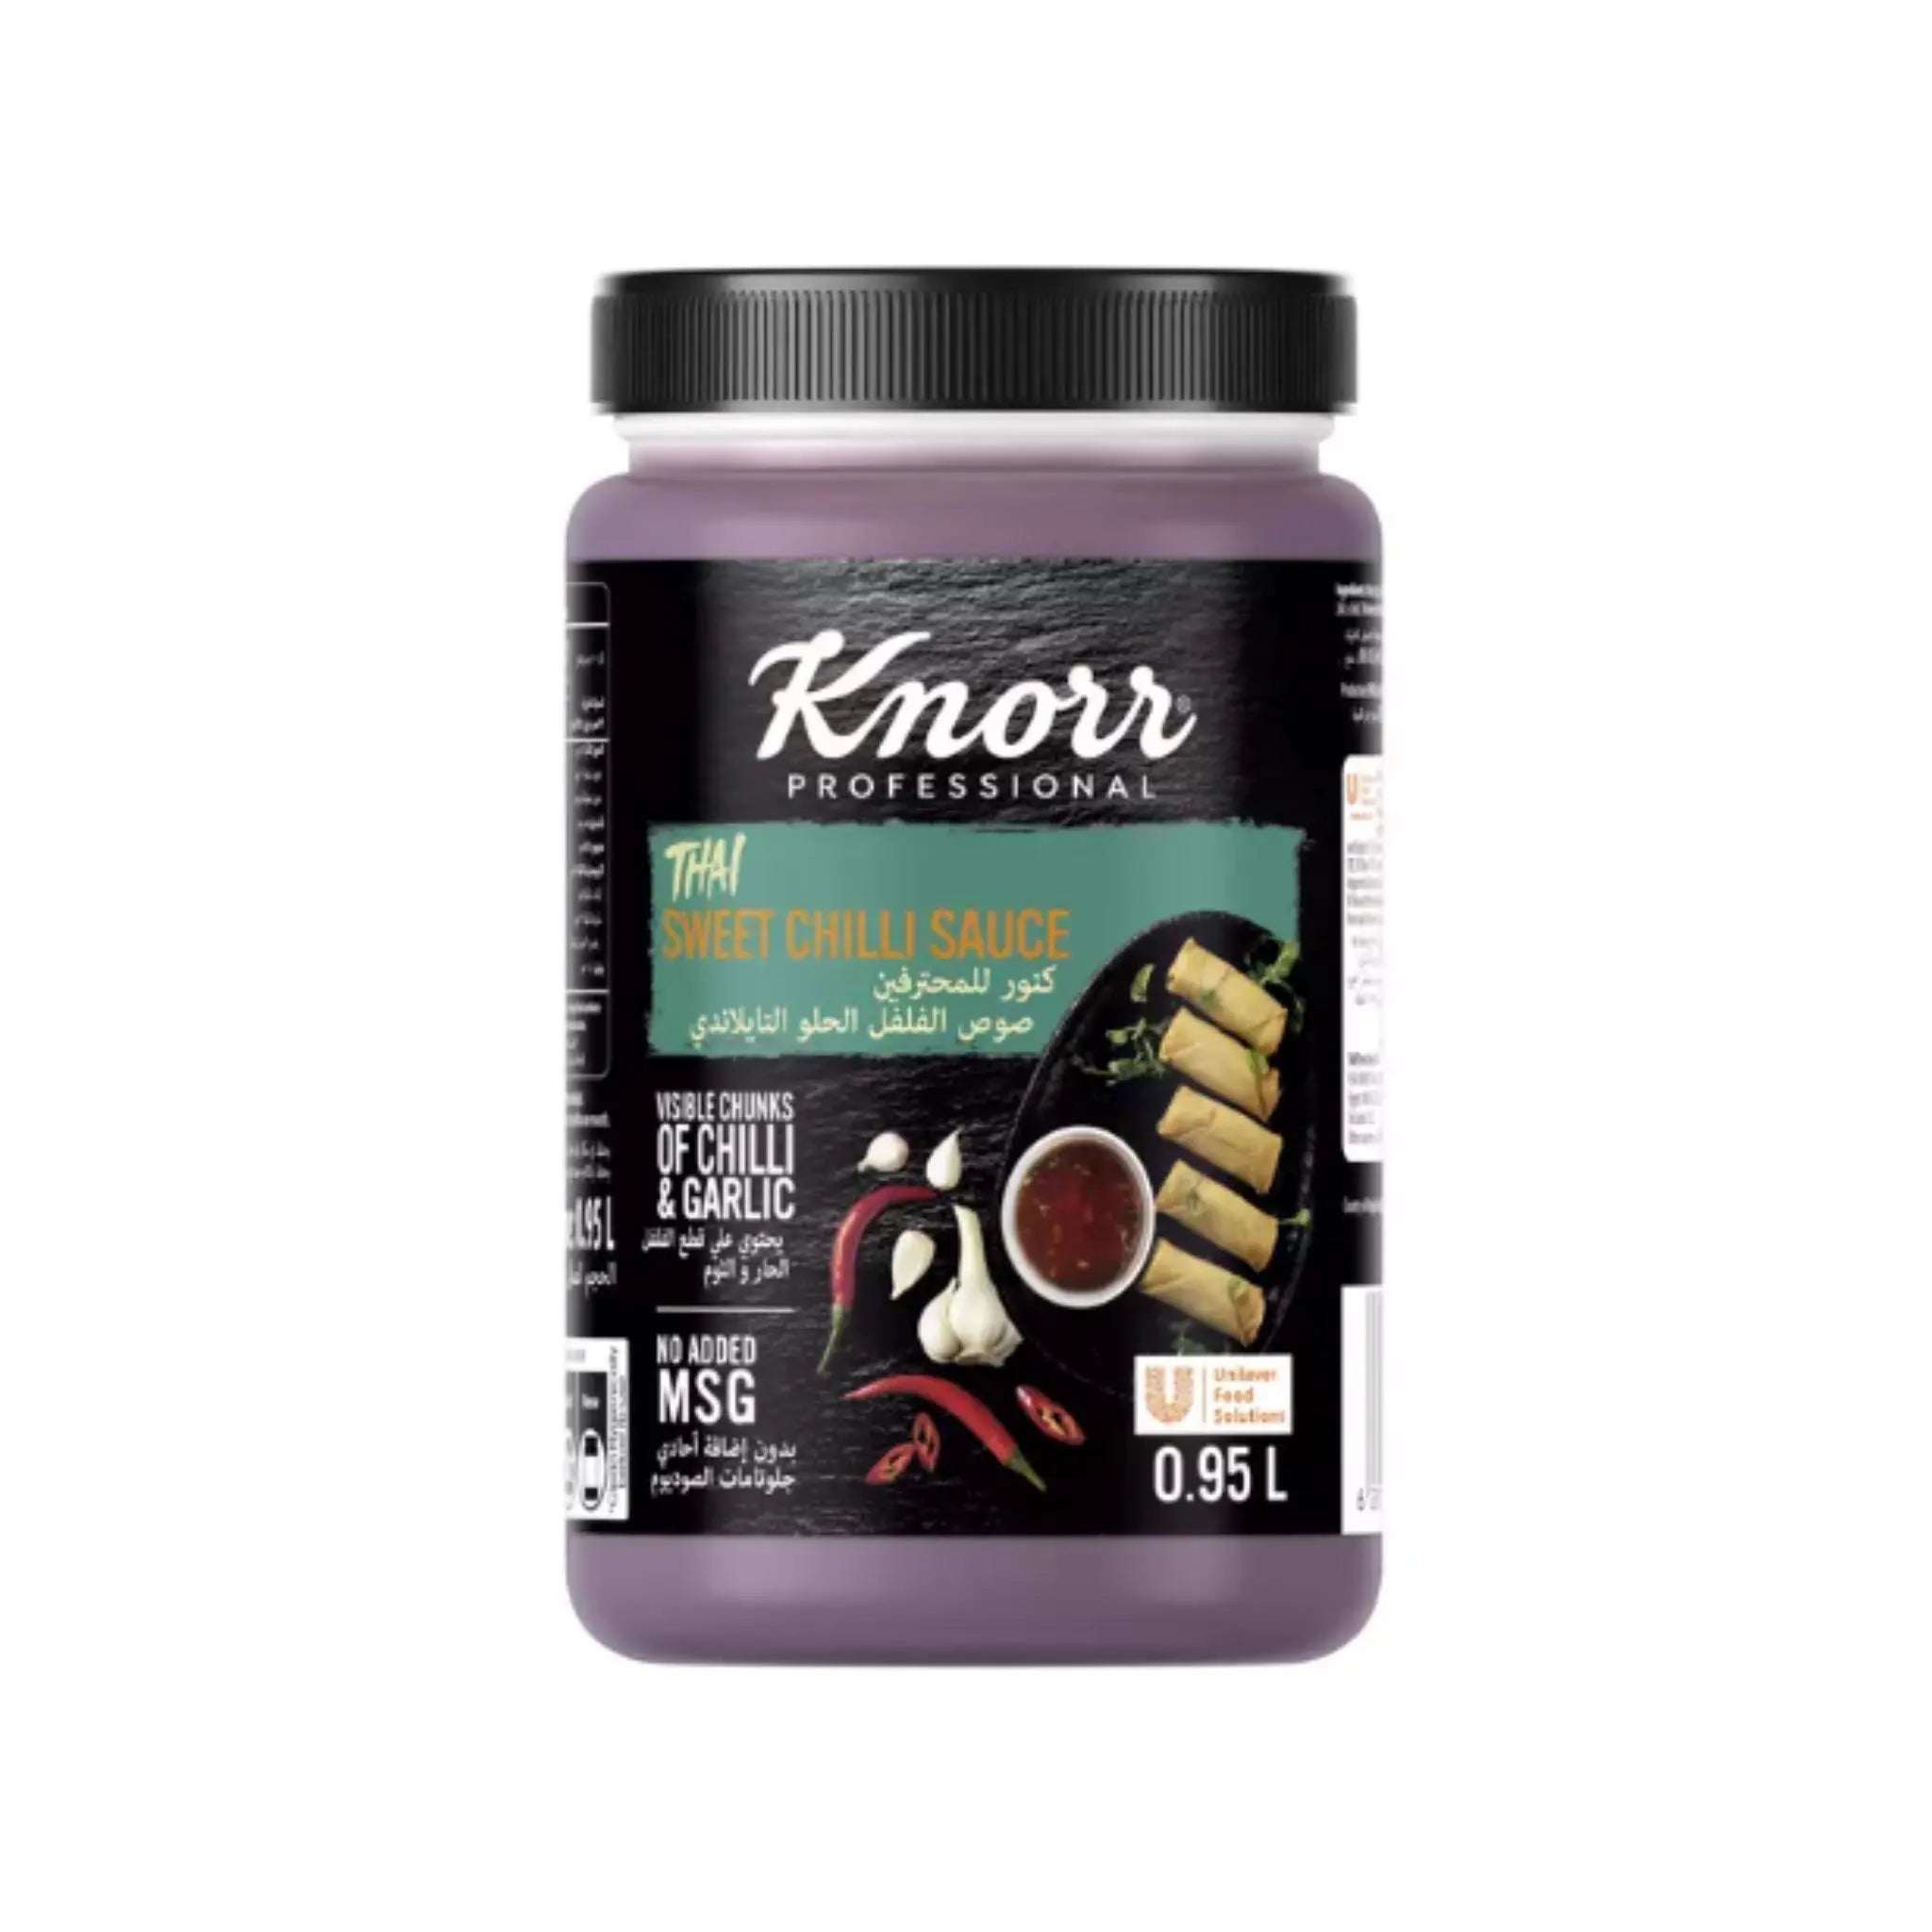 Knorr Thai Sweet Chilli Sauce - 6x0.95L (1 carton) - Marino.AE